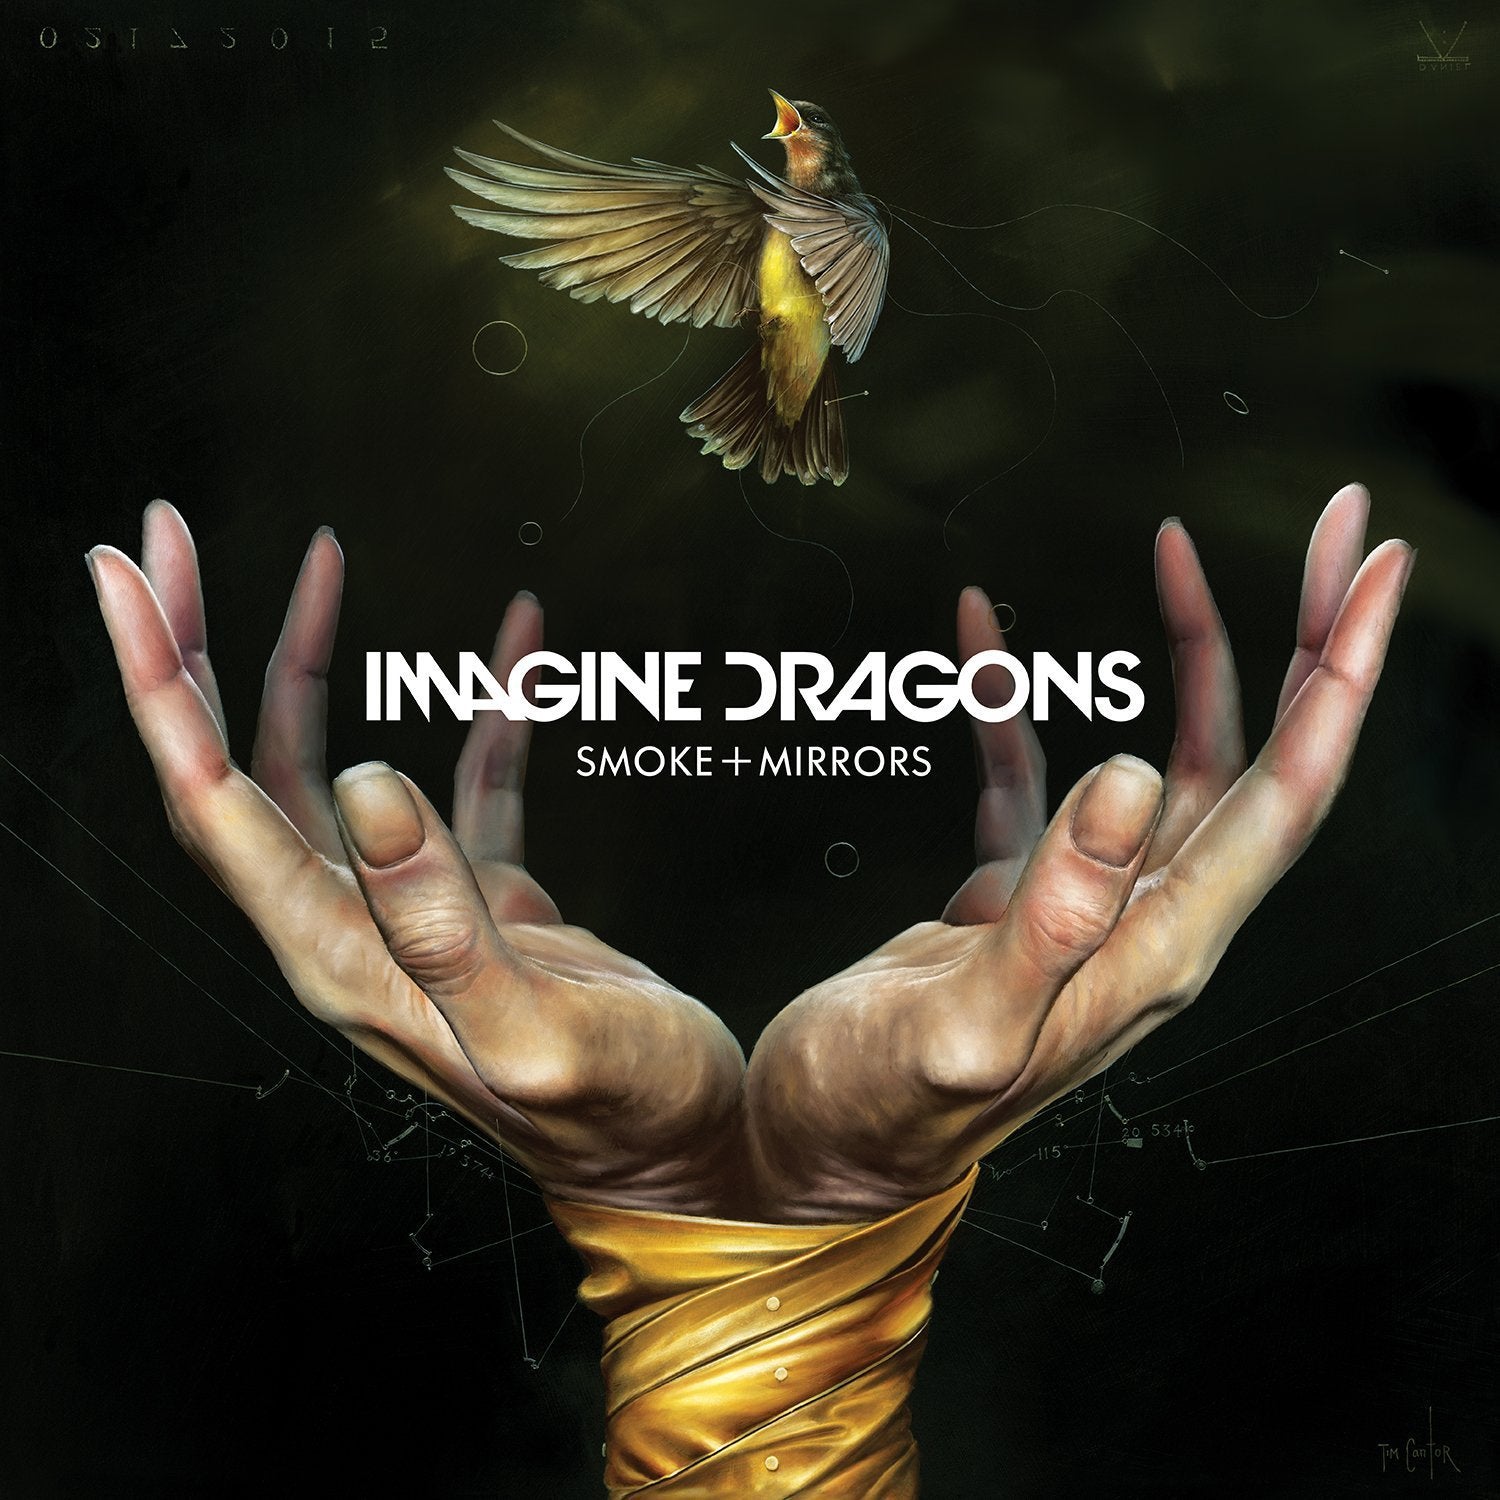 imagine-dragons-smoke-+-mirrors-vinyl-record-album-front